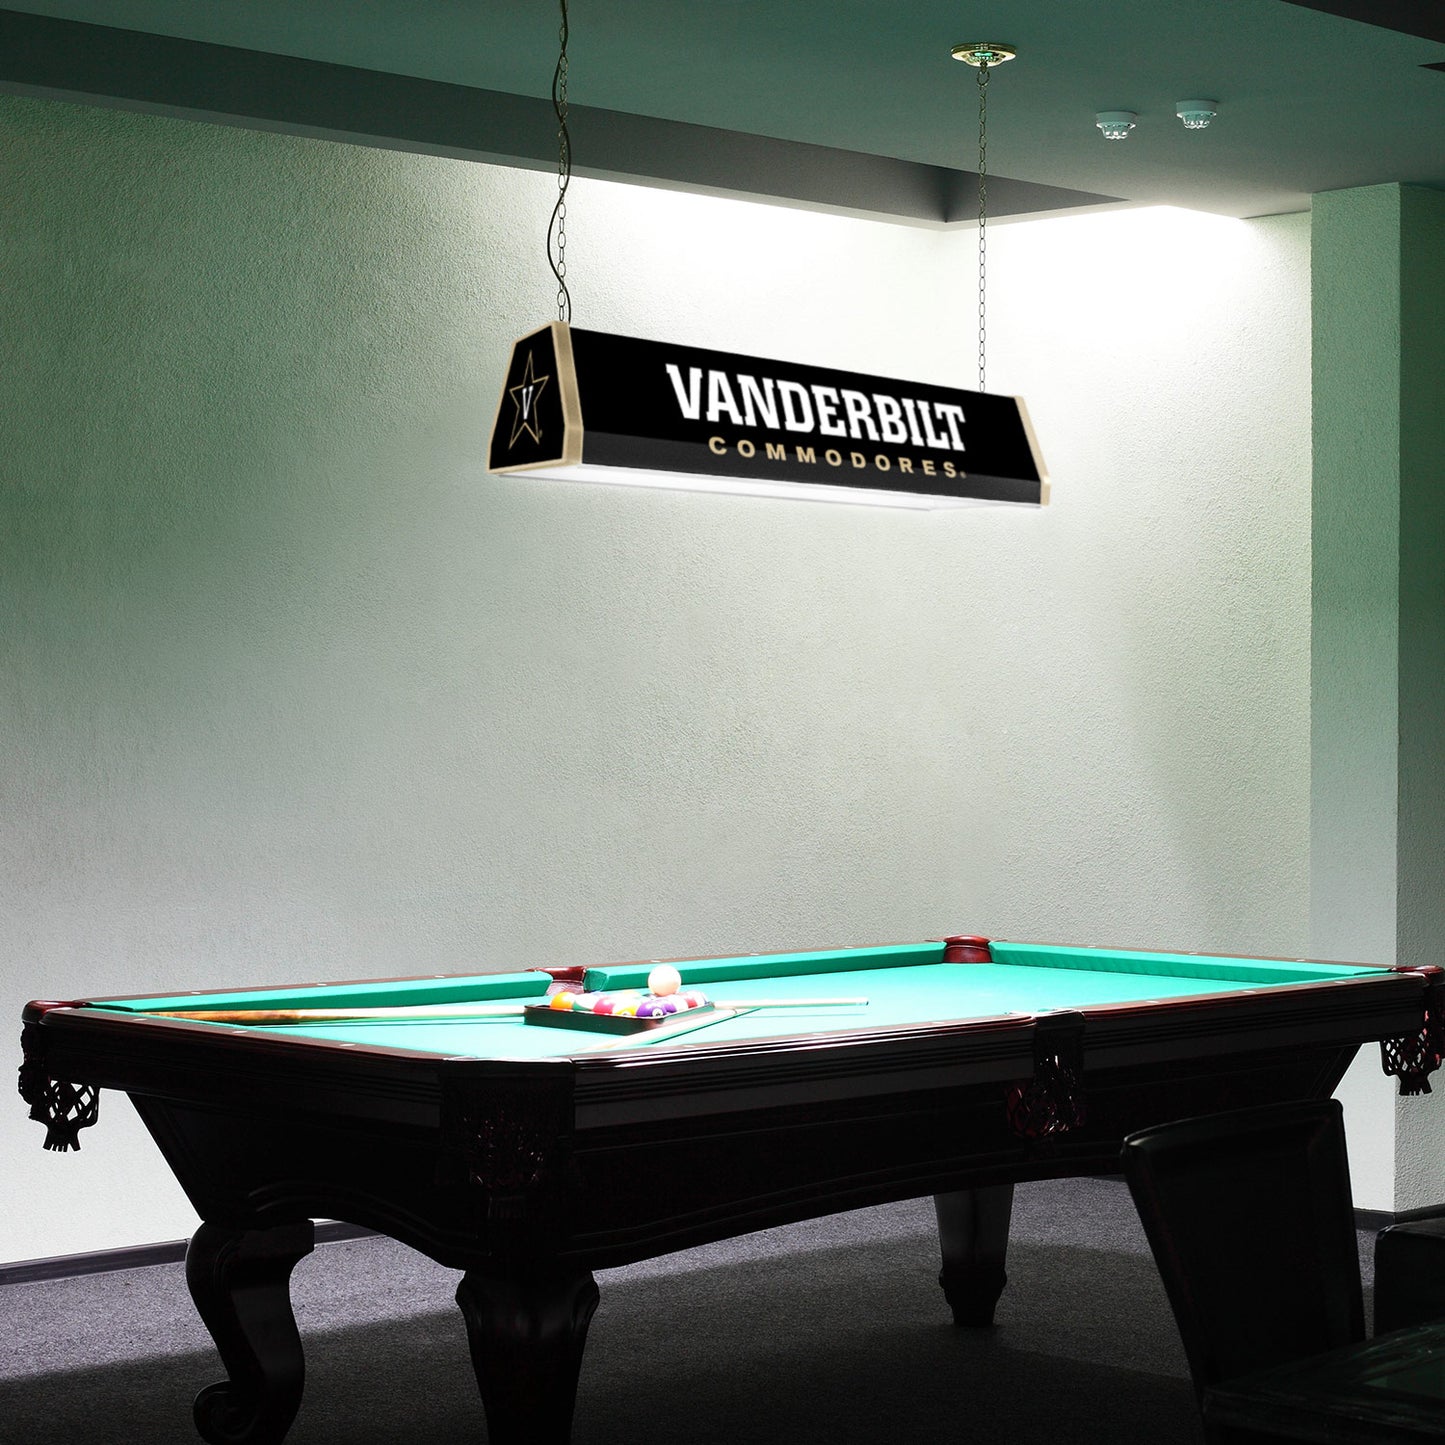 Vanderbilt Commodores Standard Pool Table Light Room View